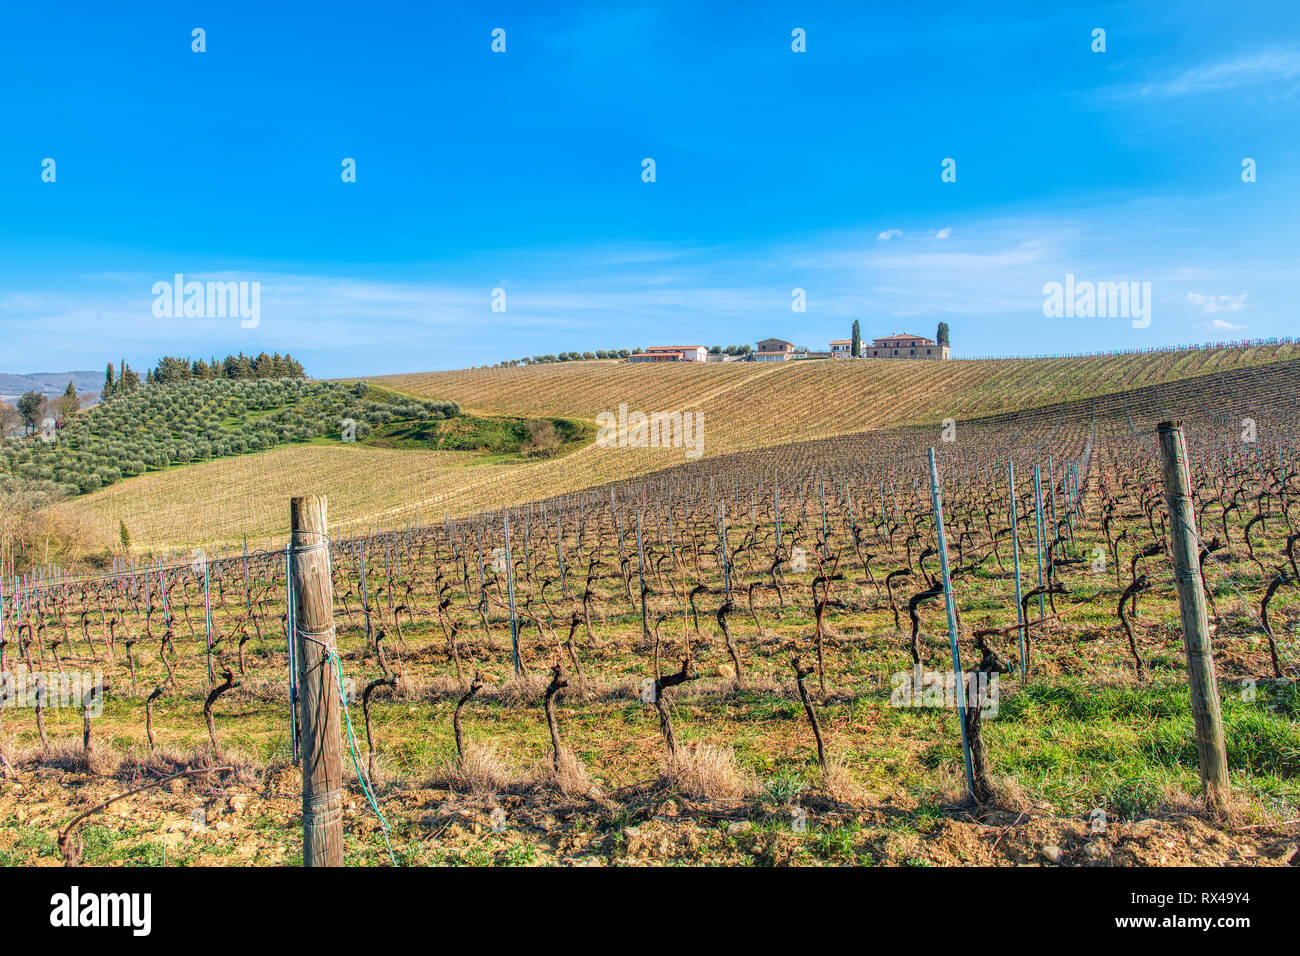 Vineyards in Tuscany Italy. Province of Siena. Stock Photo